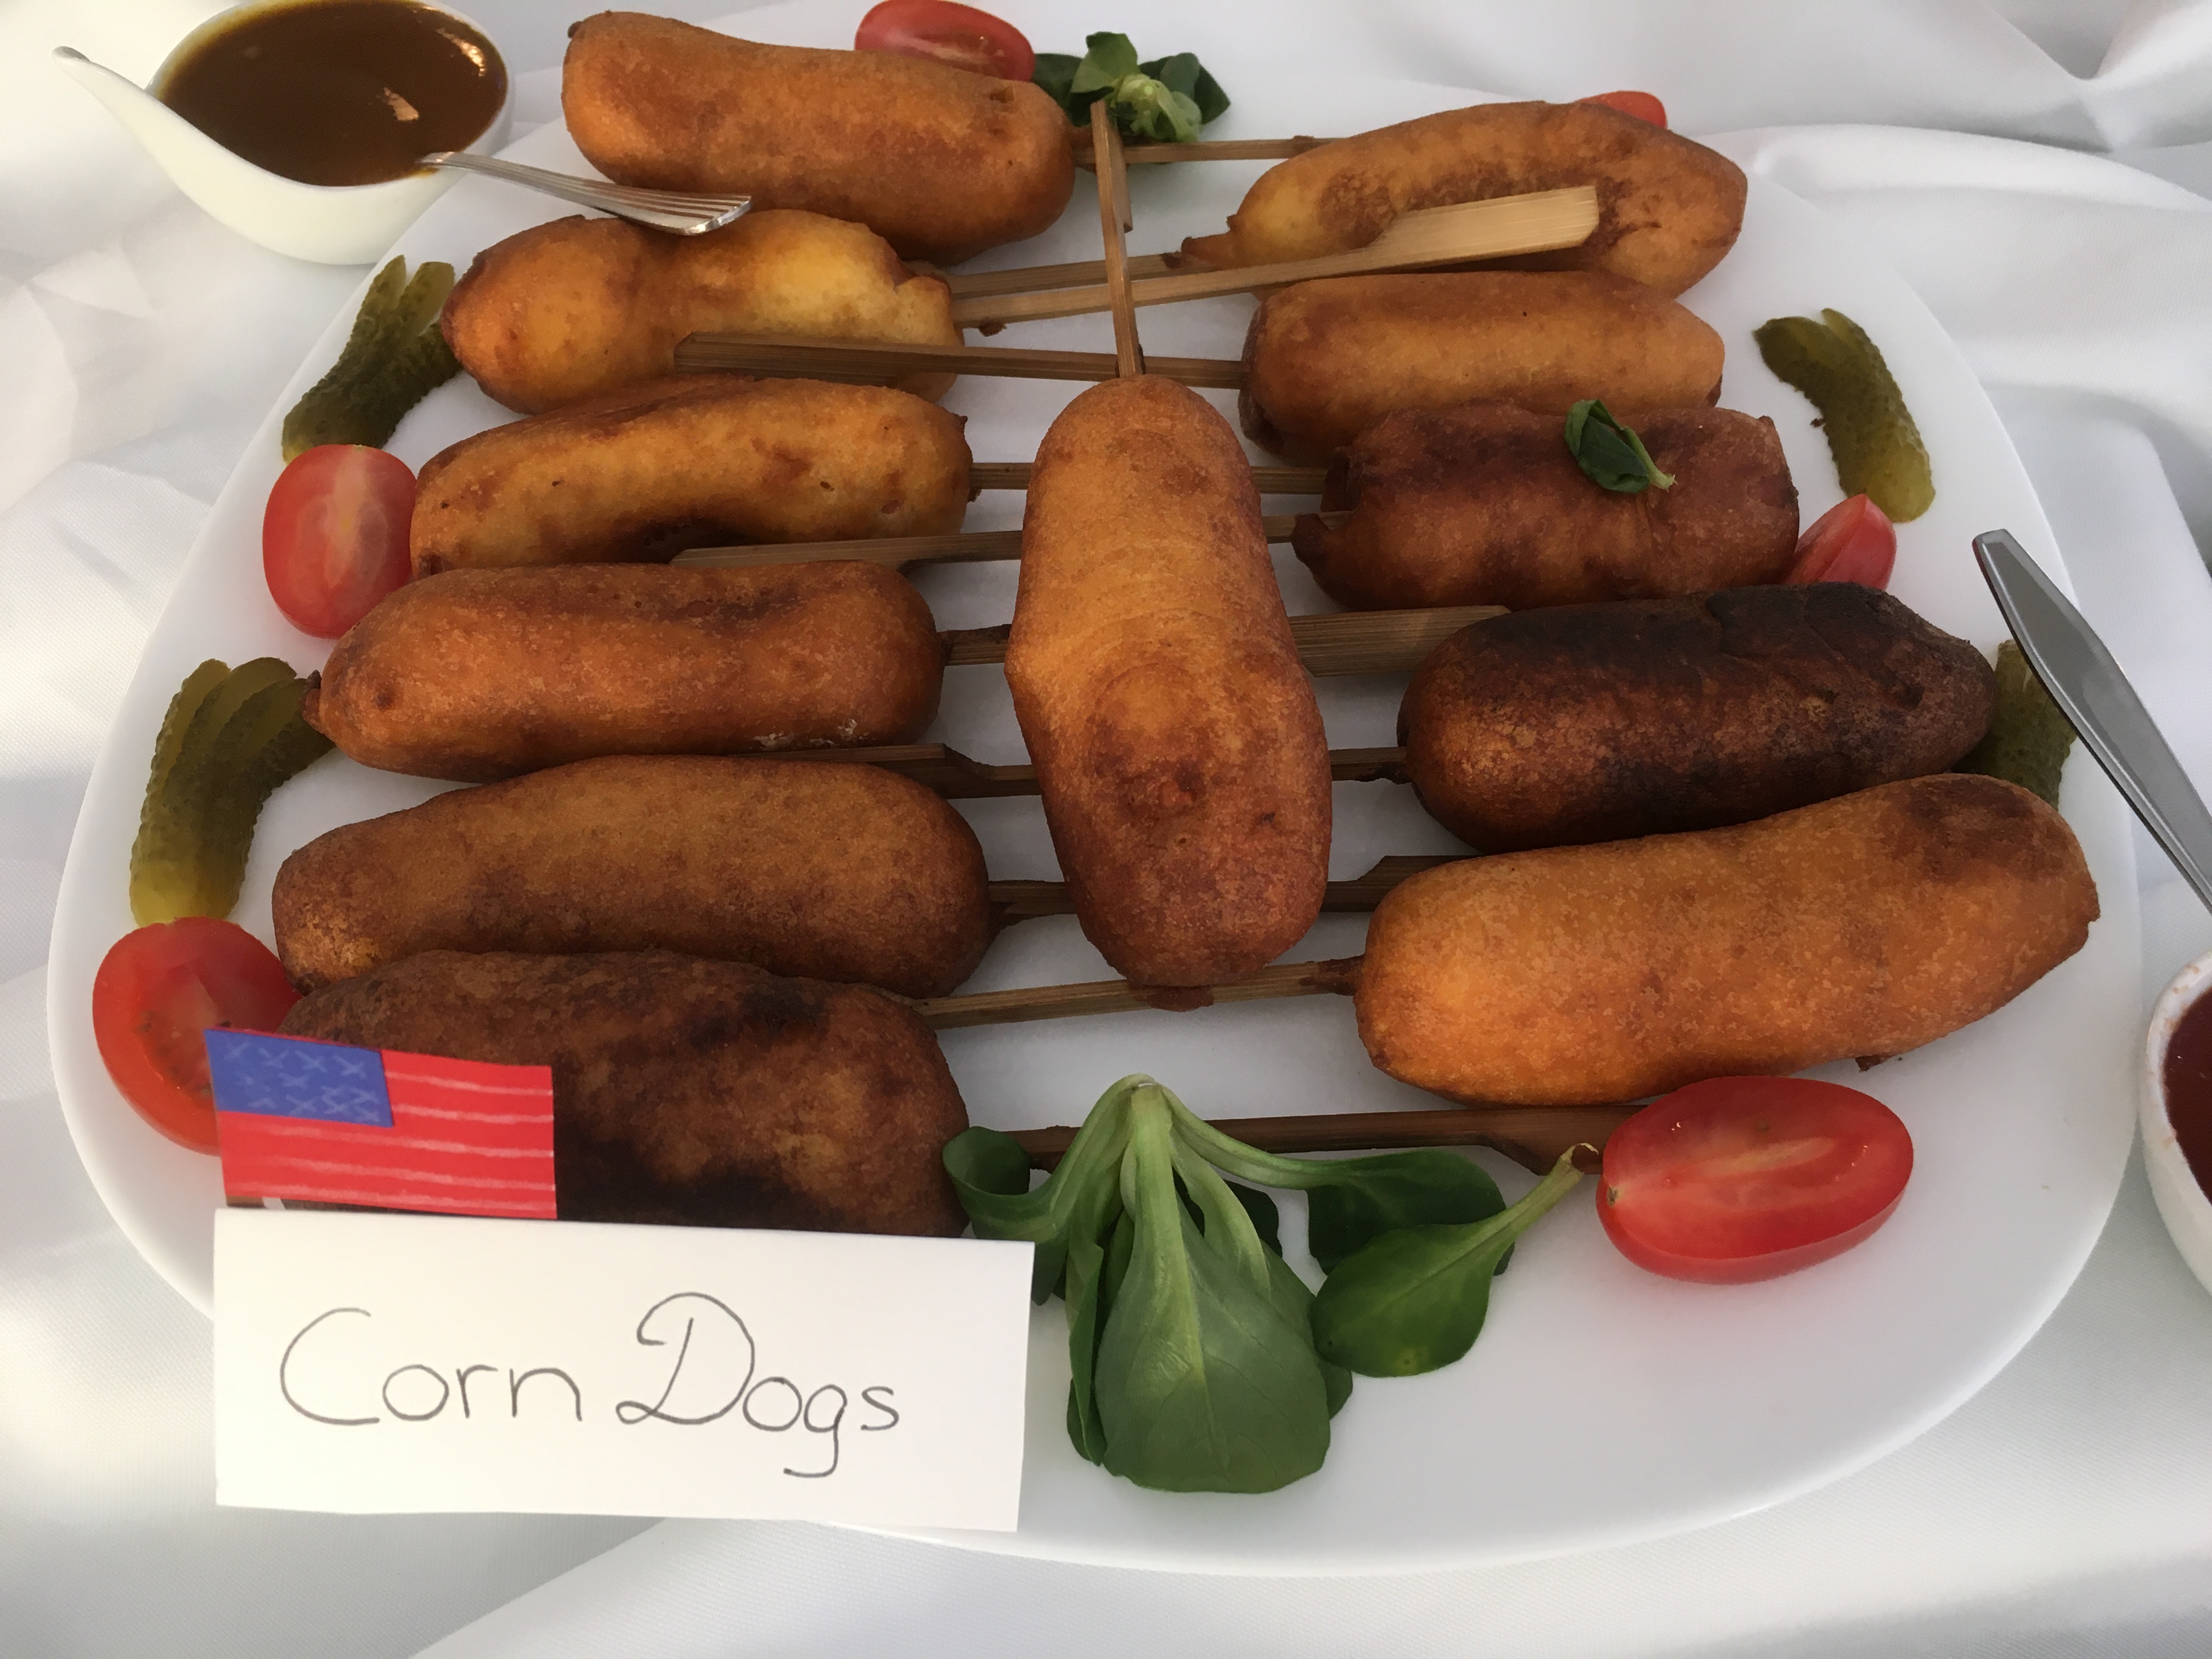 Corn-dogs